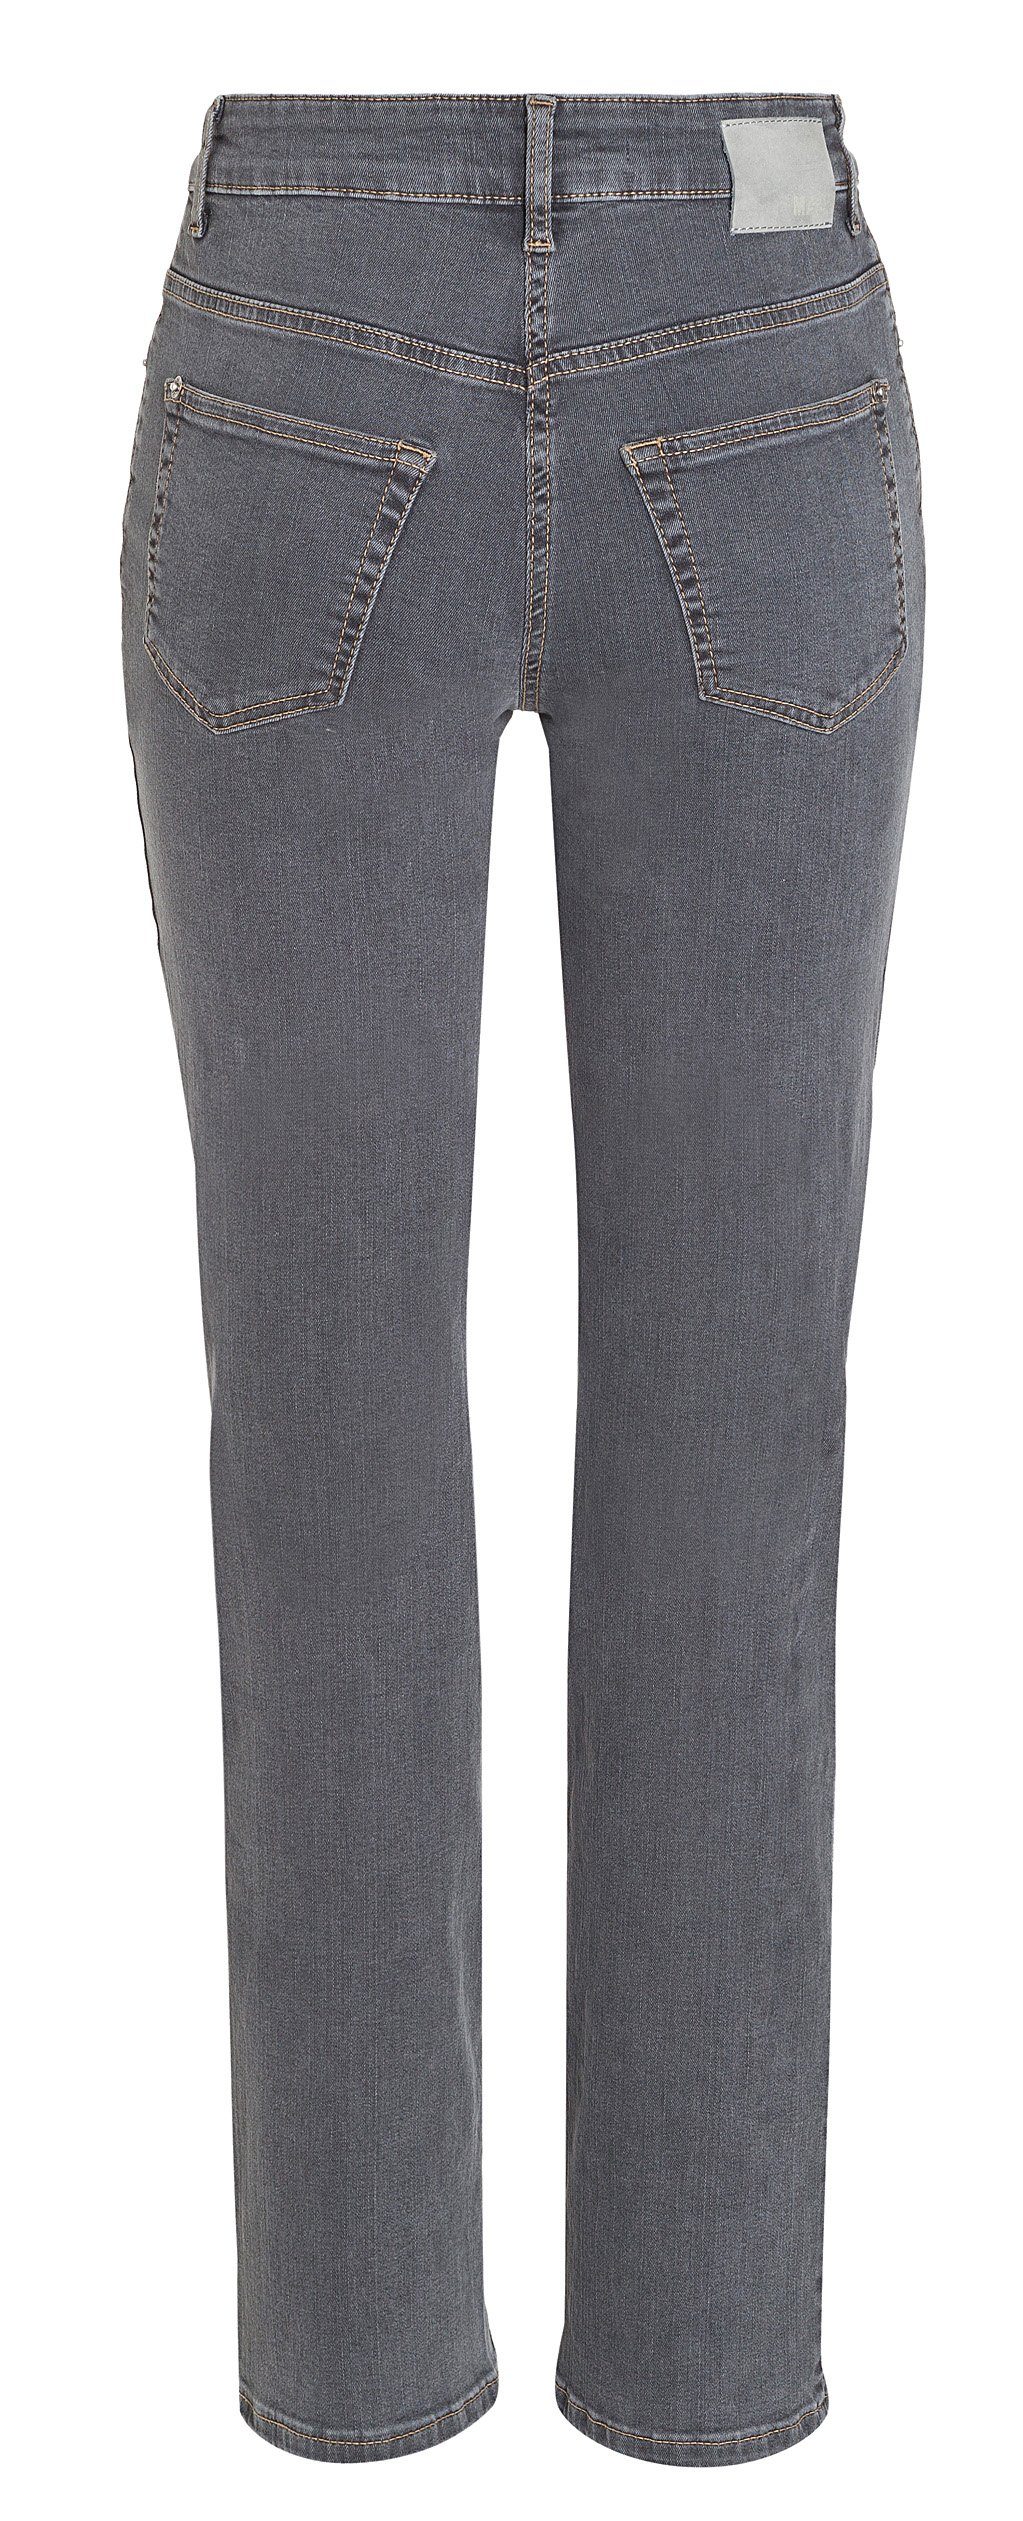 Stretch-Jeans winter grey 5040-97-0380L-D926 MELANIE MAC dark MAC